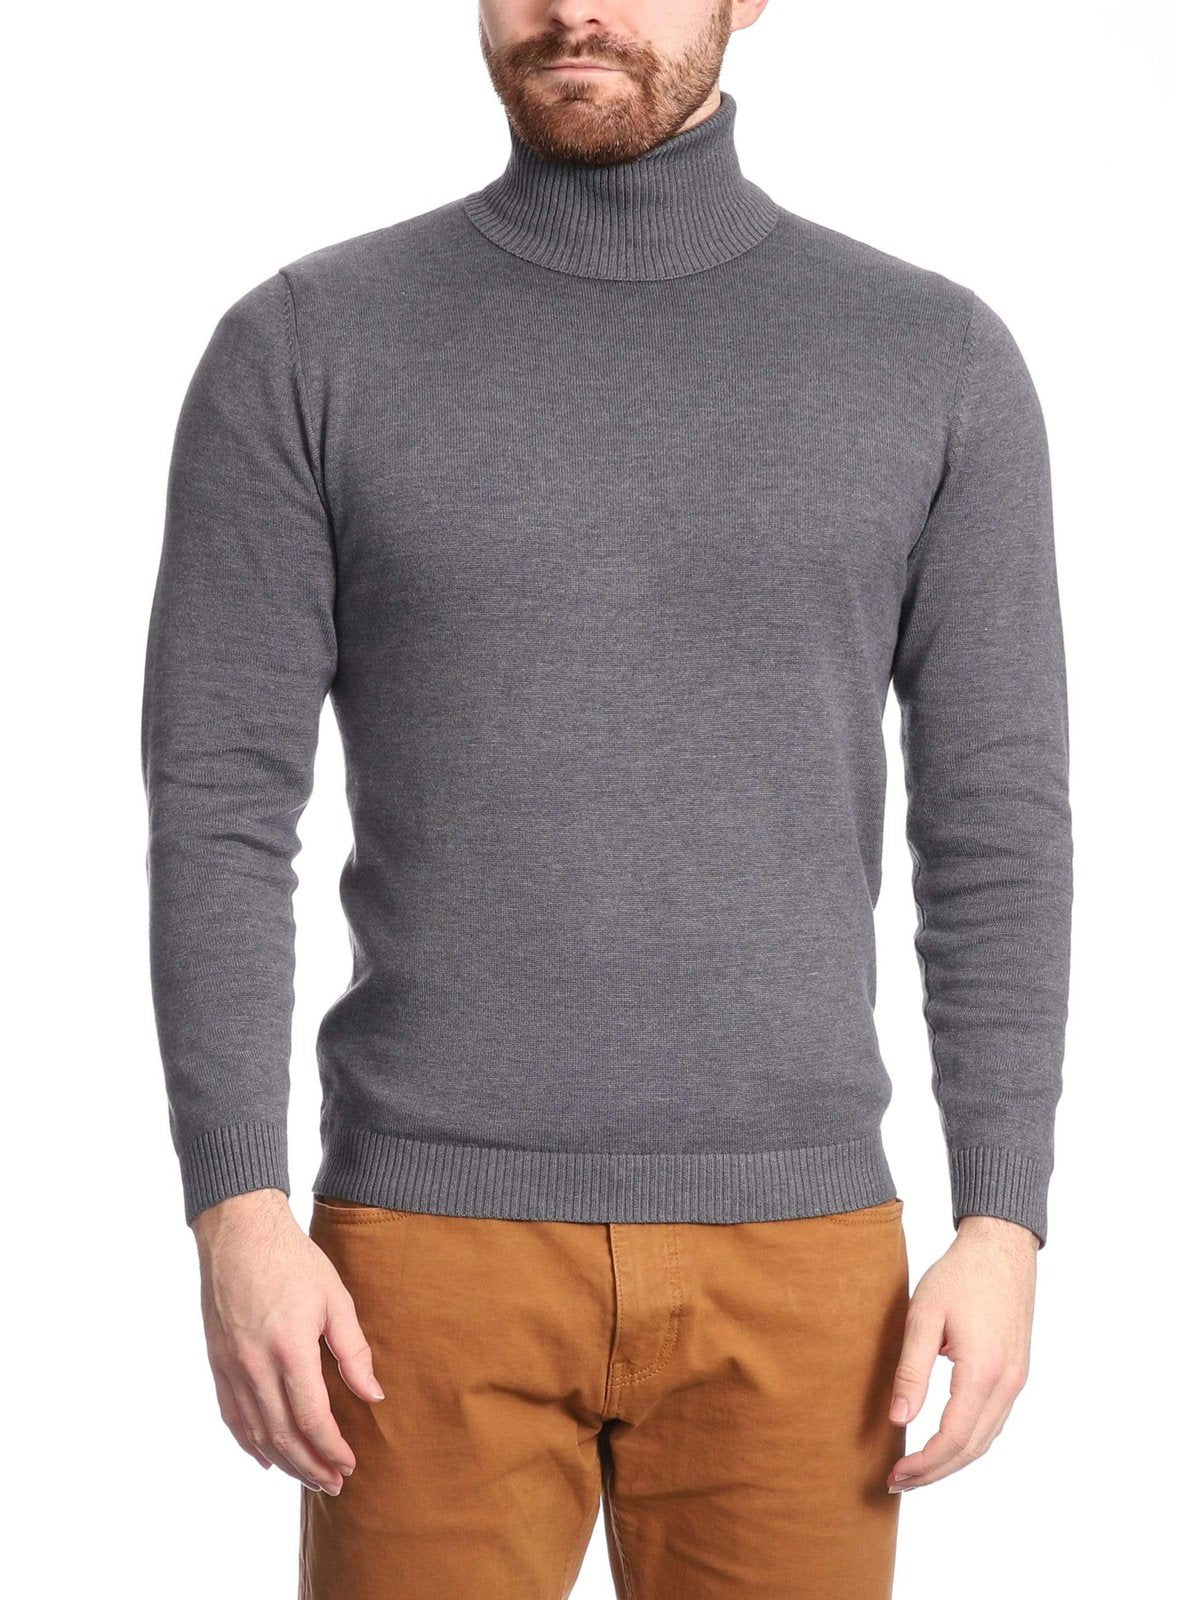 Arthur Black Default Category Migrated Gray / XXL Arthur Black Men's Solid Gray Pullover Cotton Blend Turtleneck Sweater Shirt